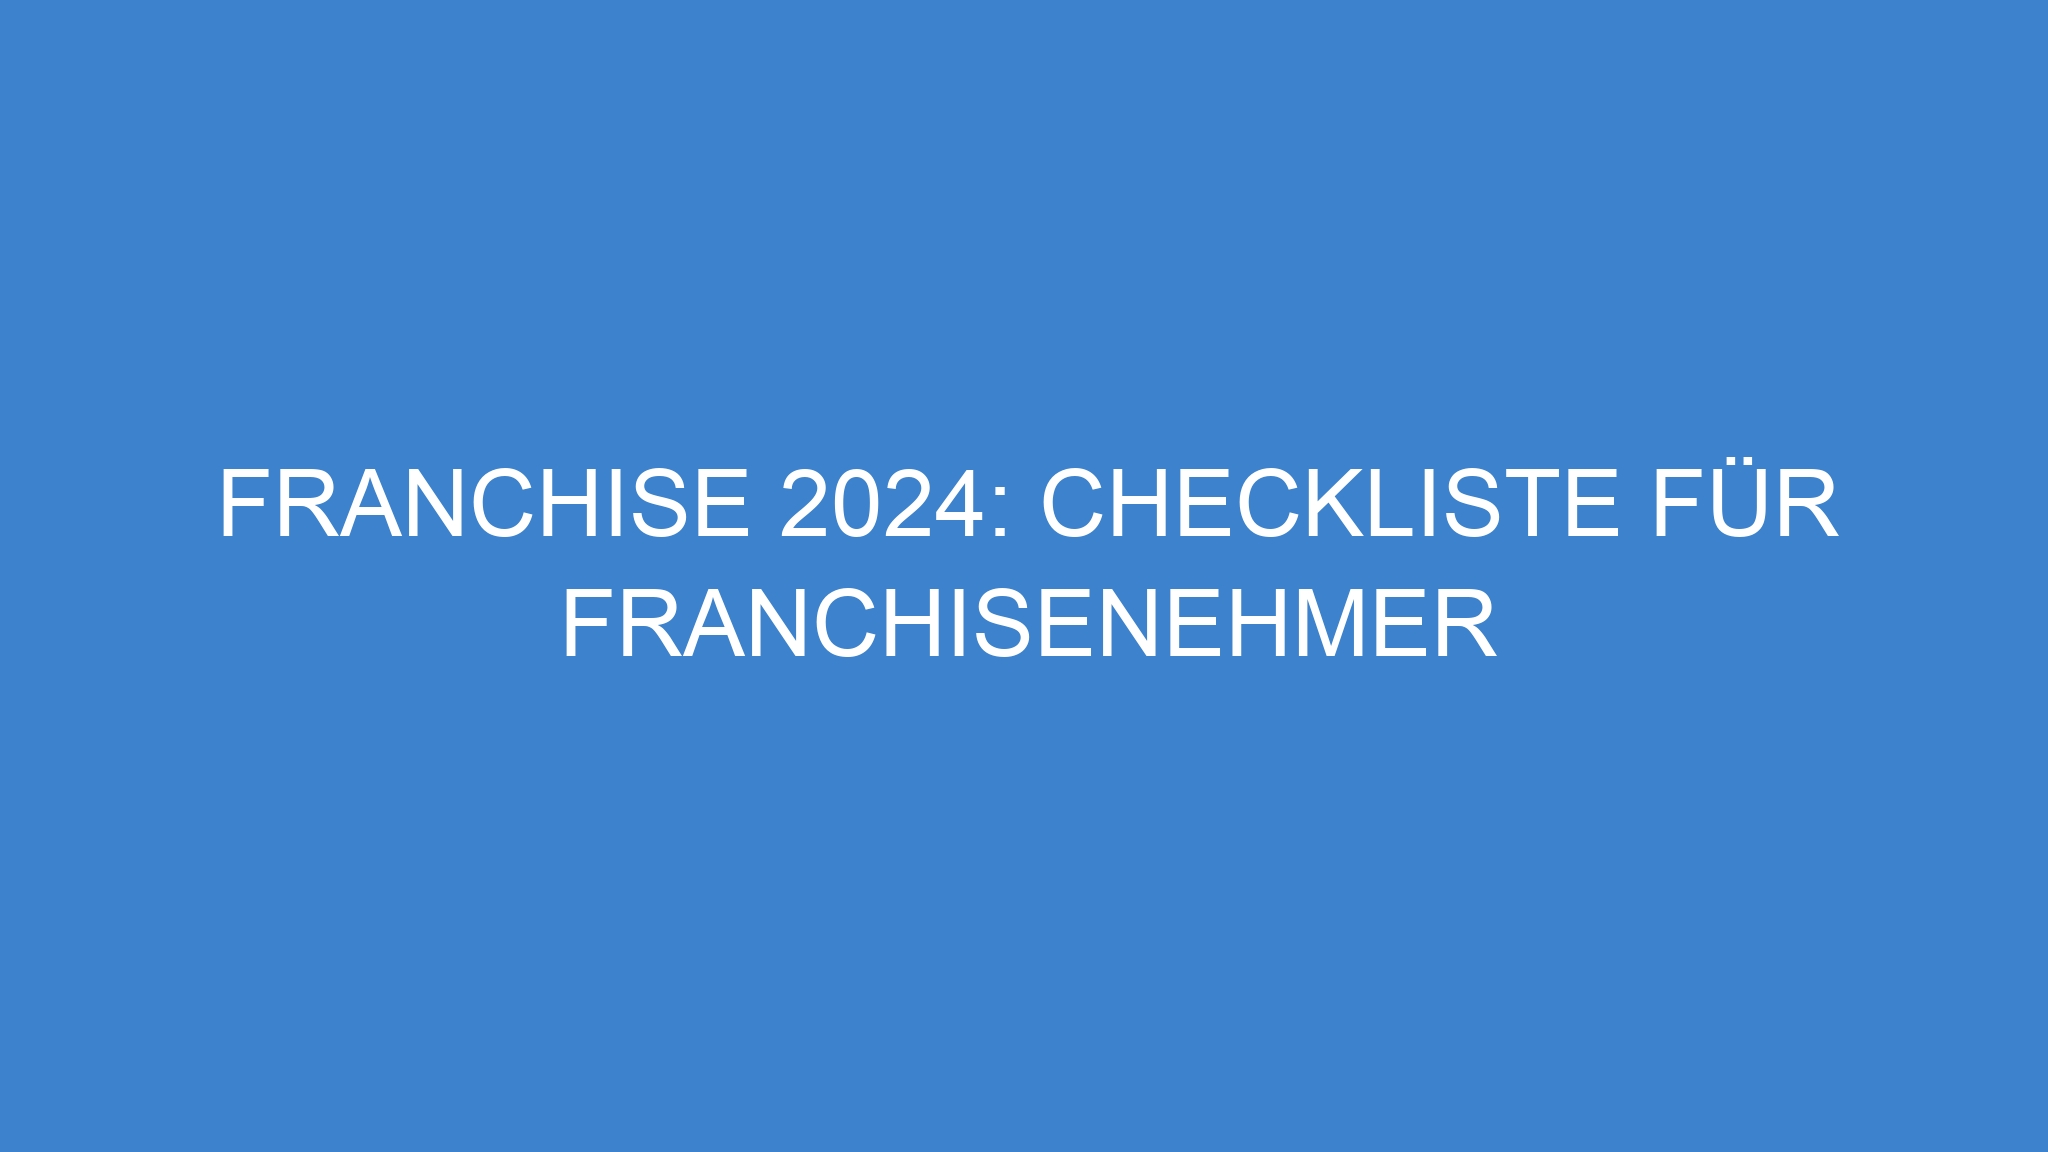 Franchise 2024: Checkliste für Franchisenehmer